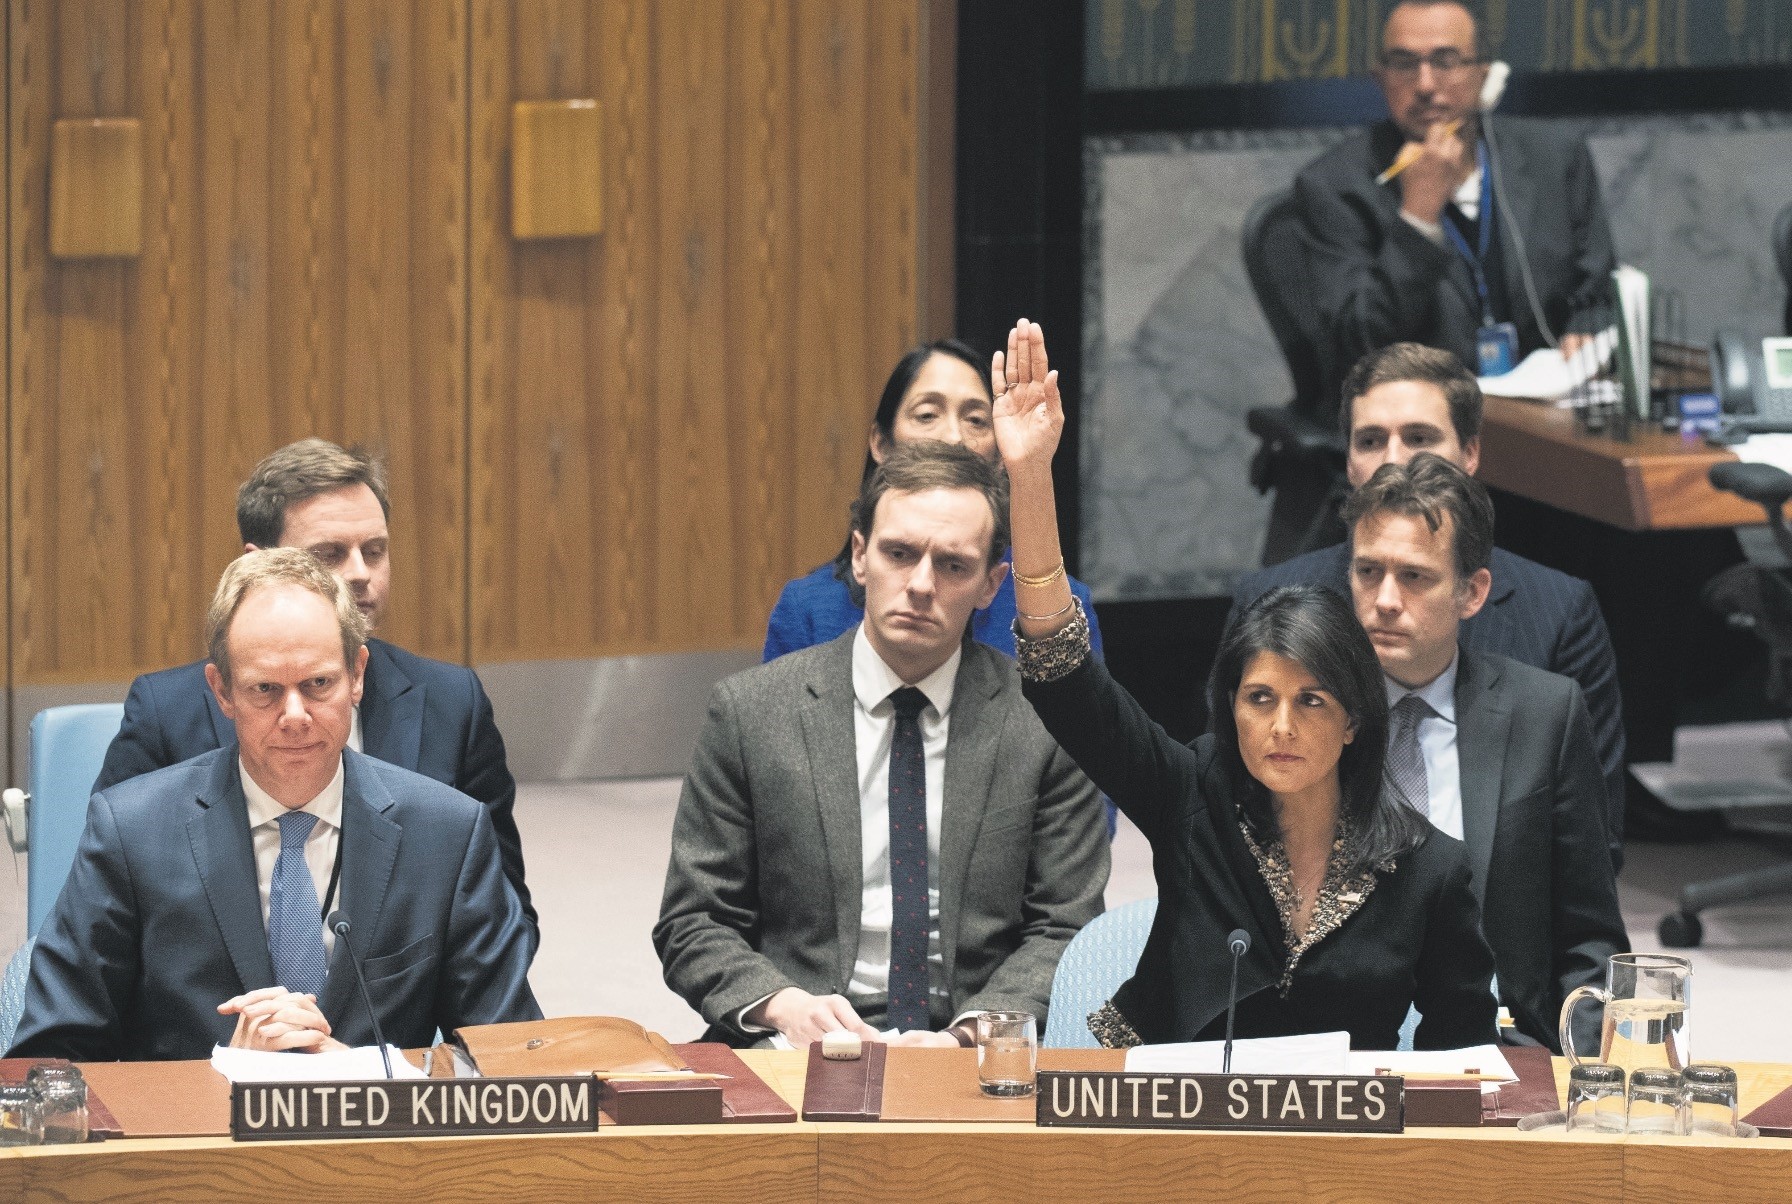 U.S. ambassador to the United Nations Nikki Haley (R) raises her hand as she votes against a resolution concerning Jerusalem's status at U.N. headquarters, New York City, Dec. 18. 